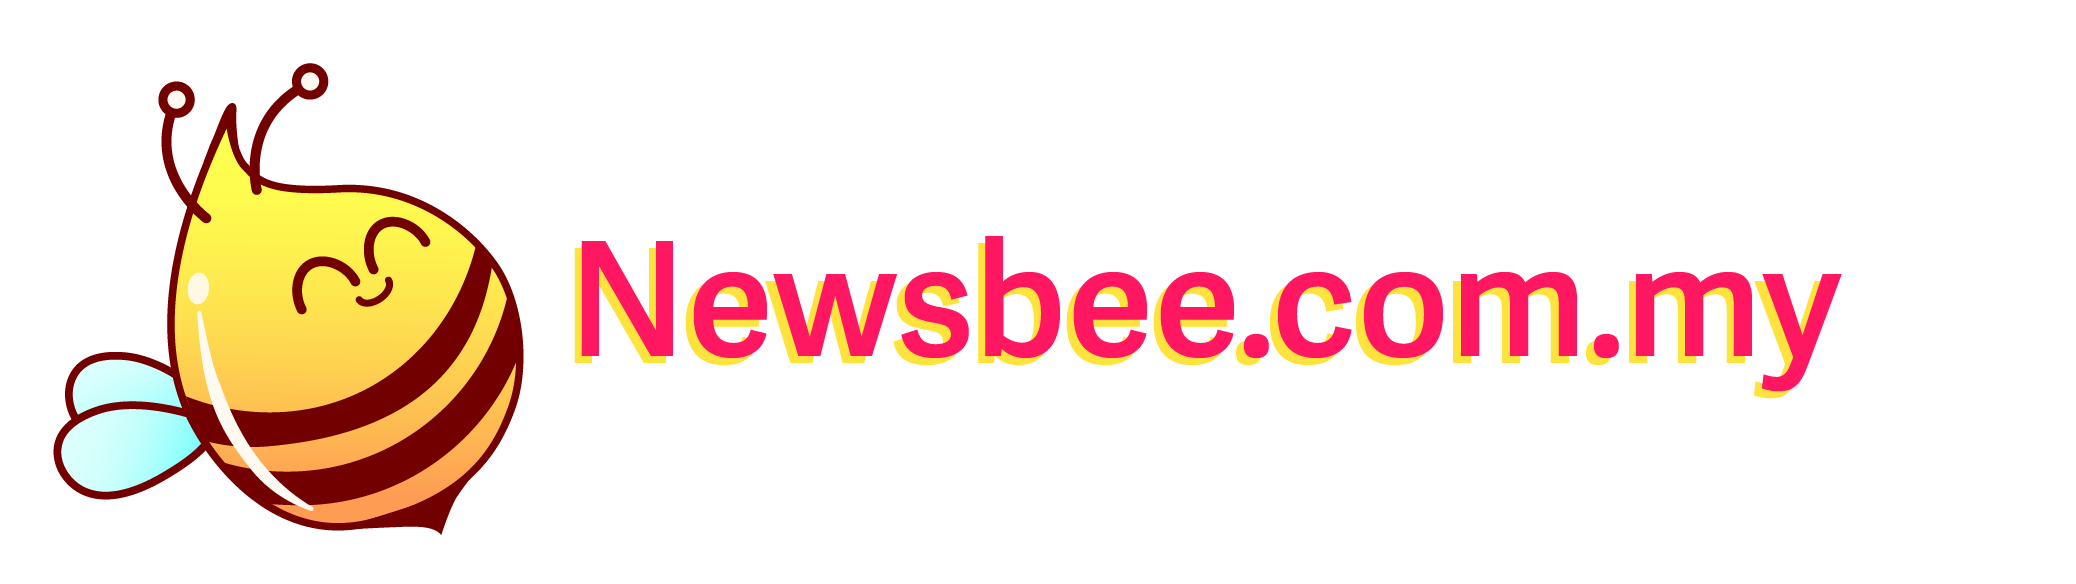 newsbee-logo-landscape